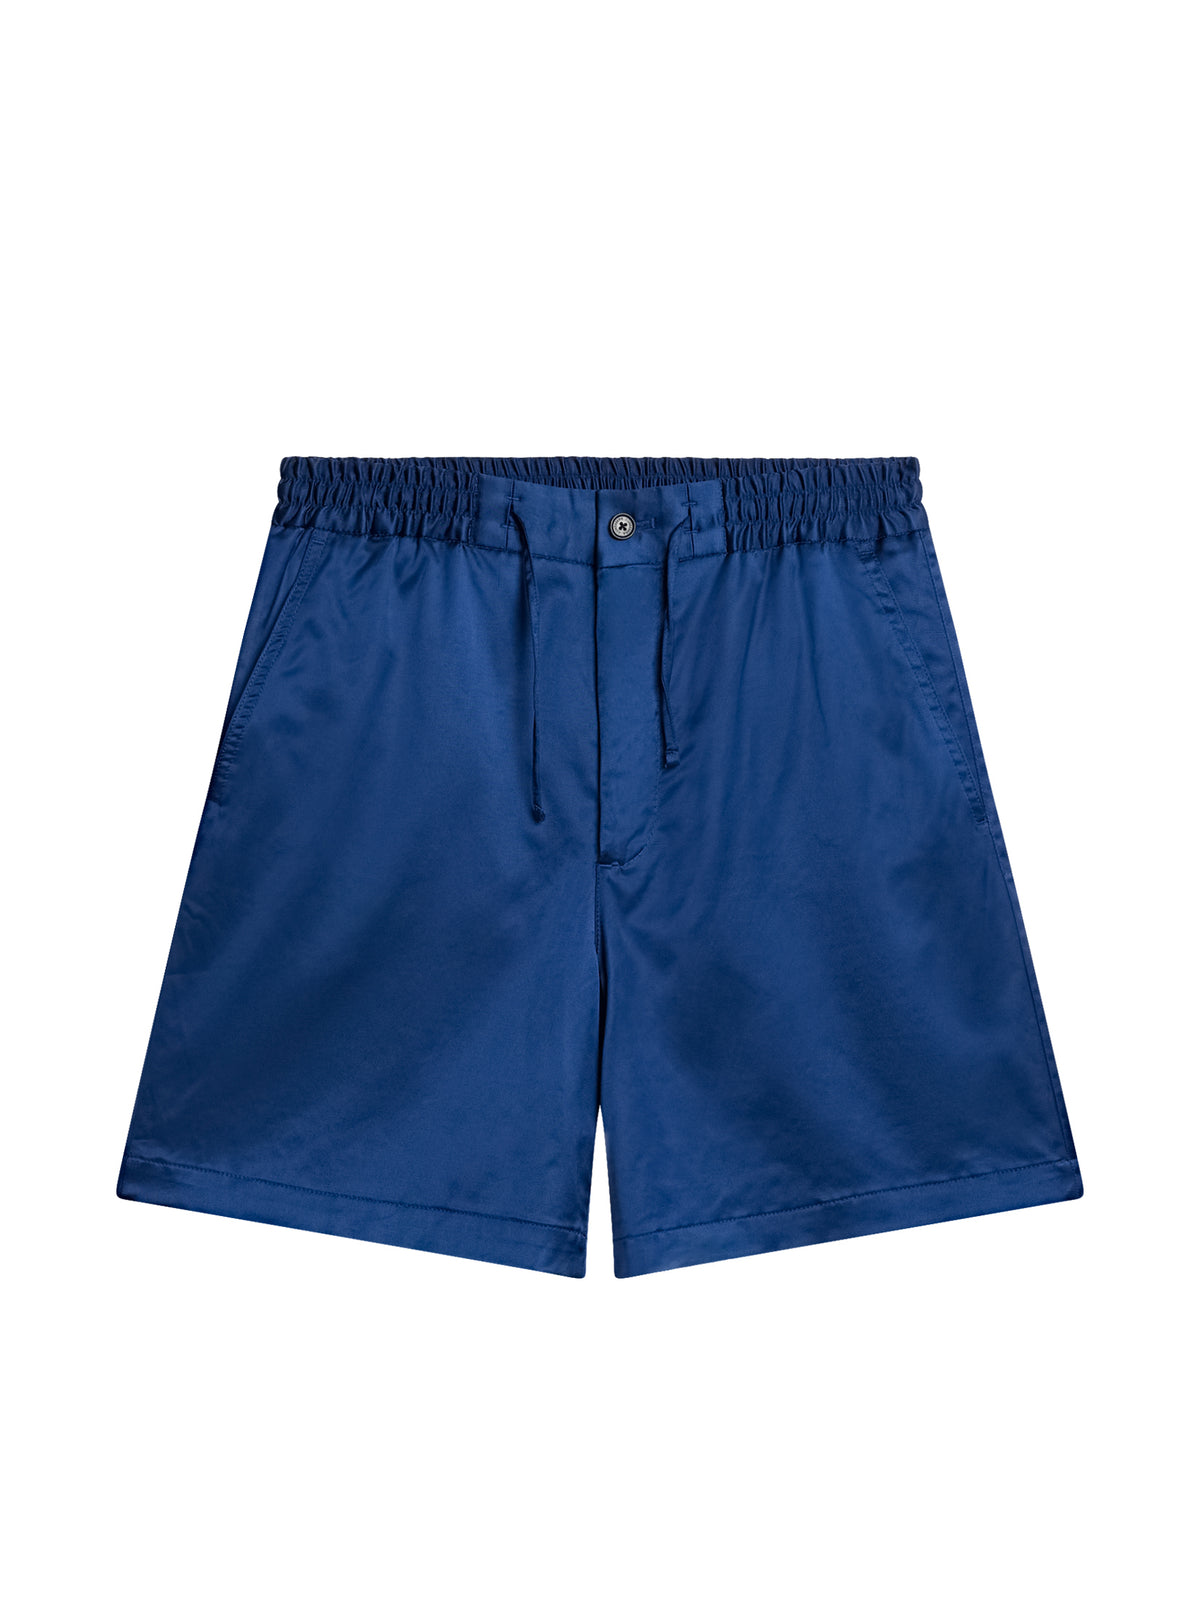 Earl Silky Shorts / Estate Blue